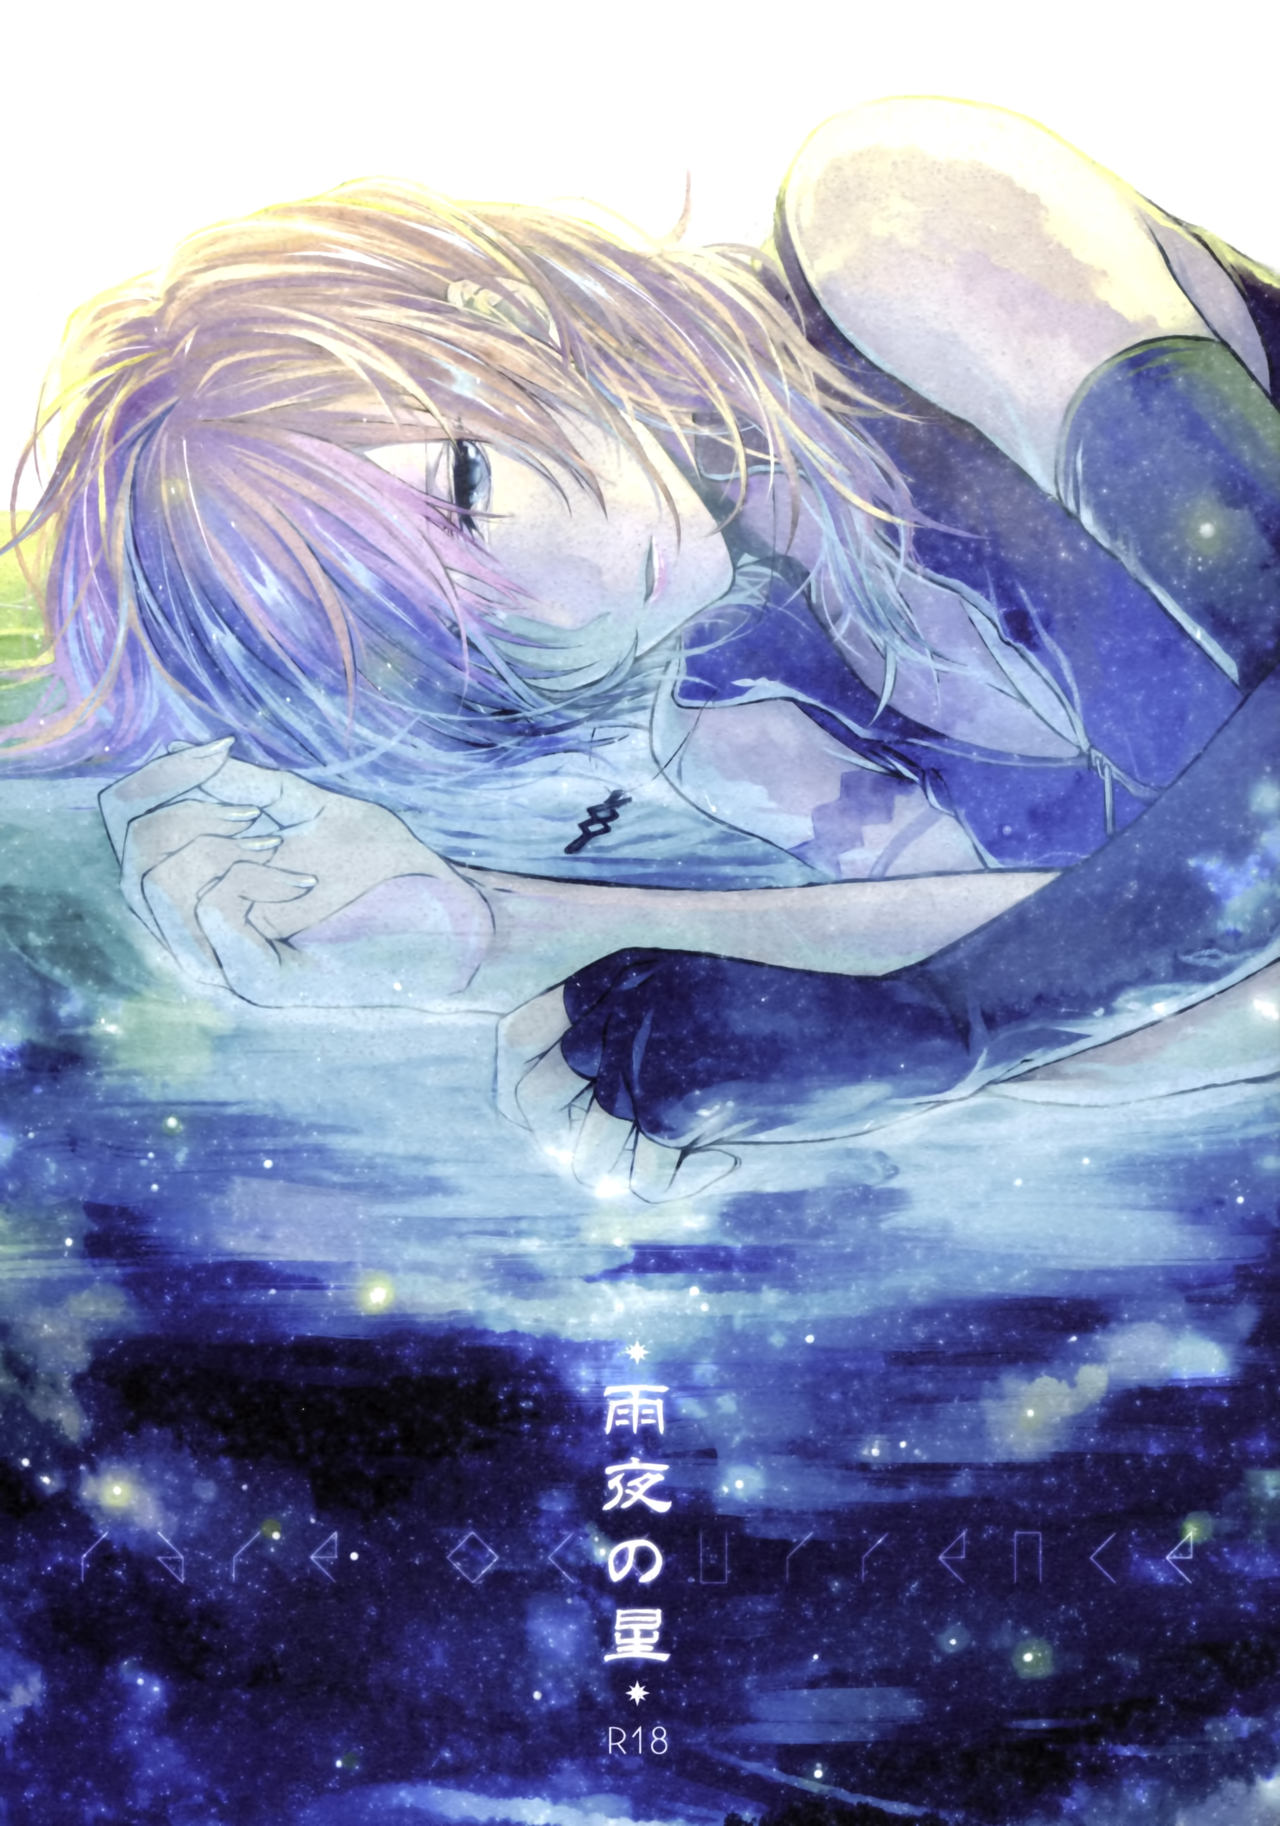 (C83) [CassiS (RIOKO)] Amayo no Hoshi | A Star on a Rainy Night (Final Fantasy XIII-2) [English] {Crystalium} (C83) [CassiS (りおこ)] 雨夜の星 (ファイナルファンタジー XIII-2) [英訳]